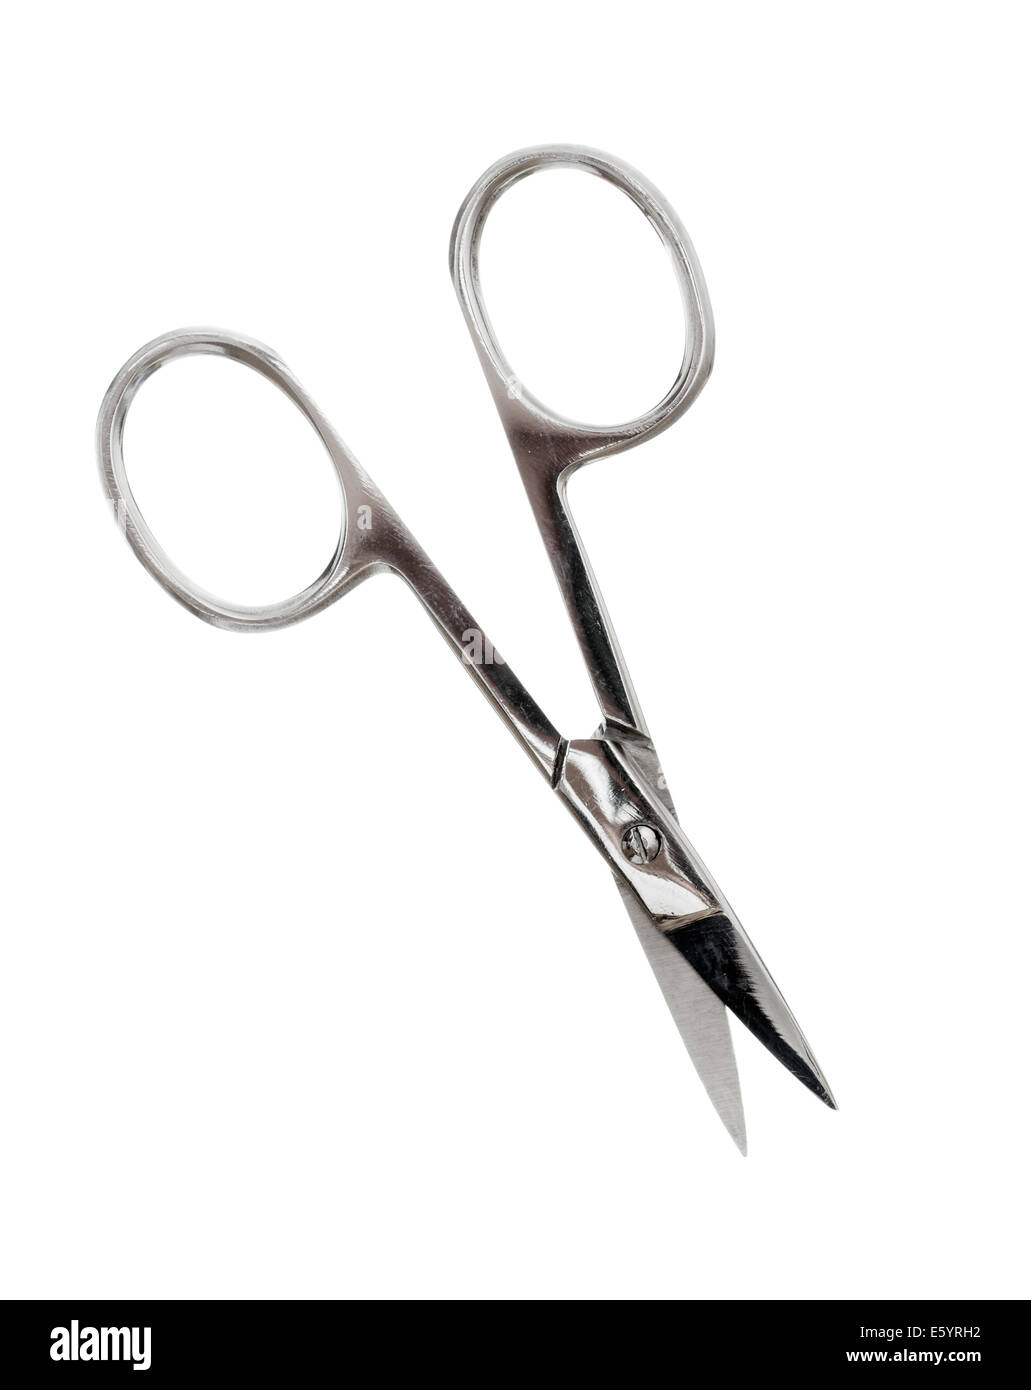 Generic small nail scissors, white background. Stock Photo